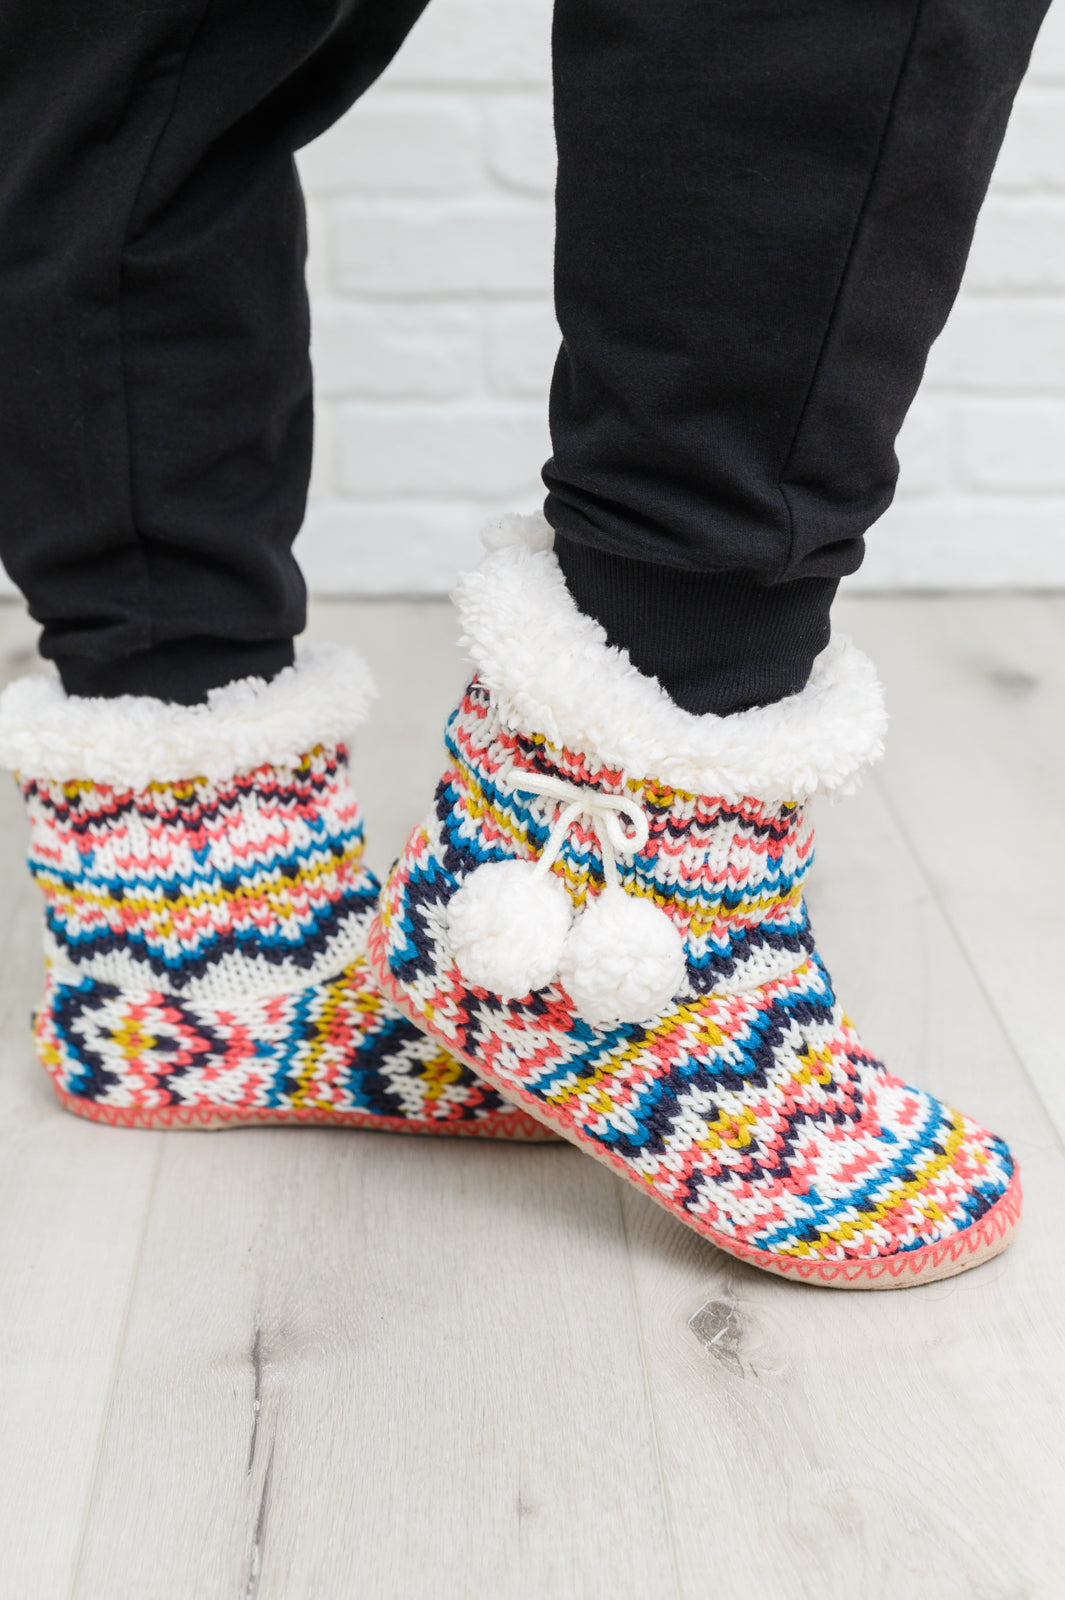 Aztec Trek Knitted Multi Color Slipper Boots   